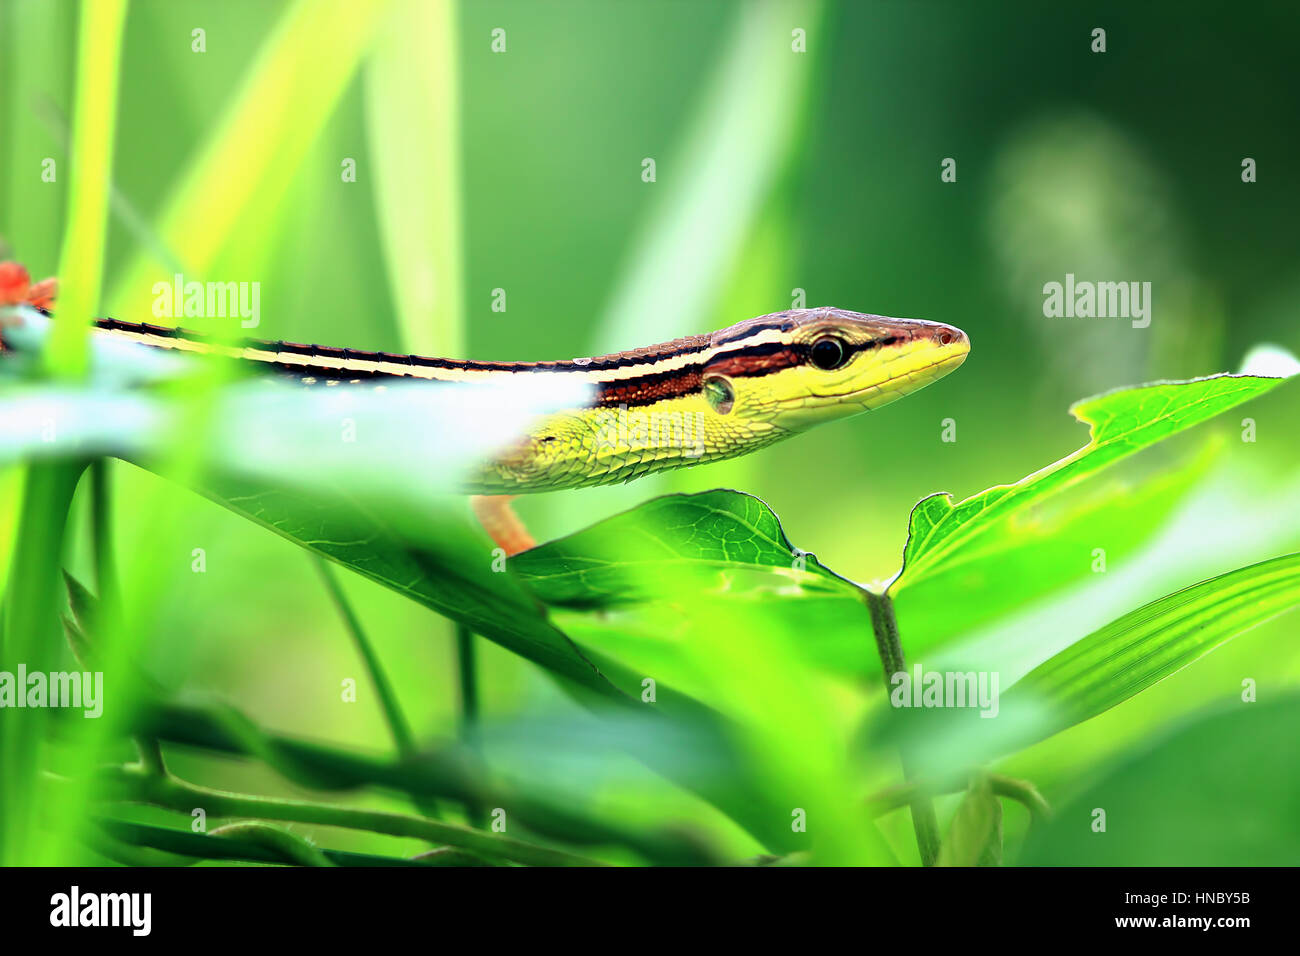 Lizard hidden in undergrowth, Indonesia Stock Photo